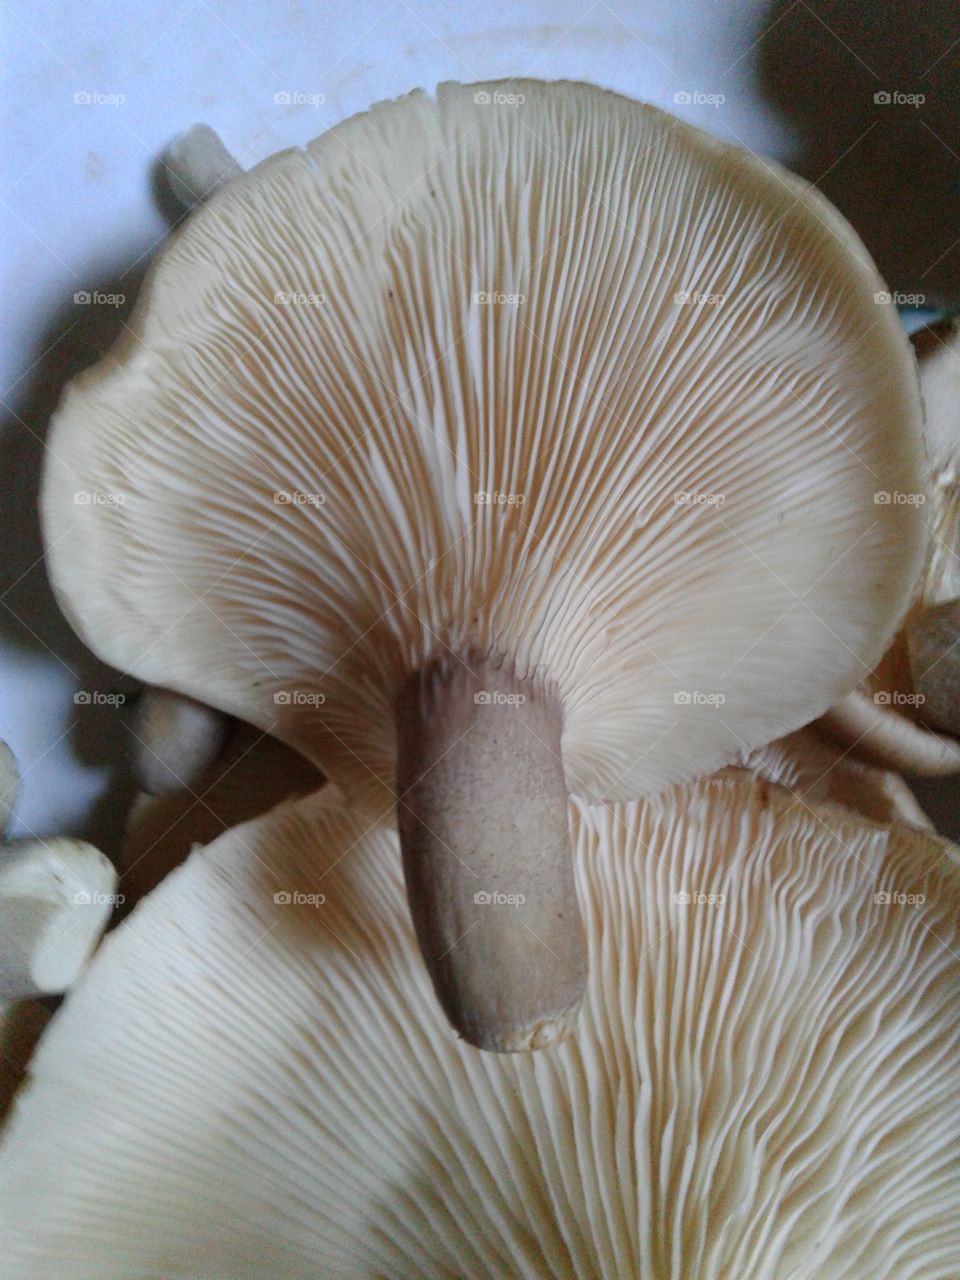 mushroom _ abalone(down side)